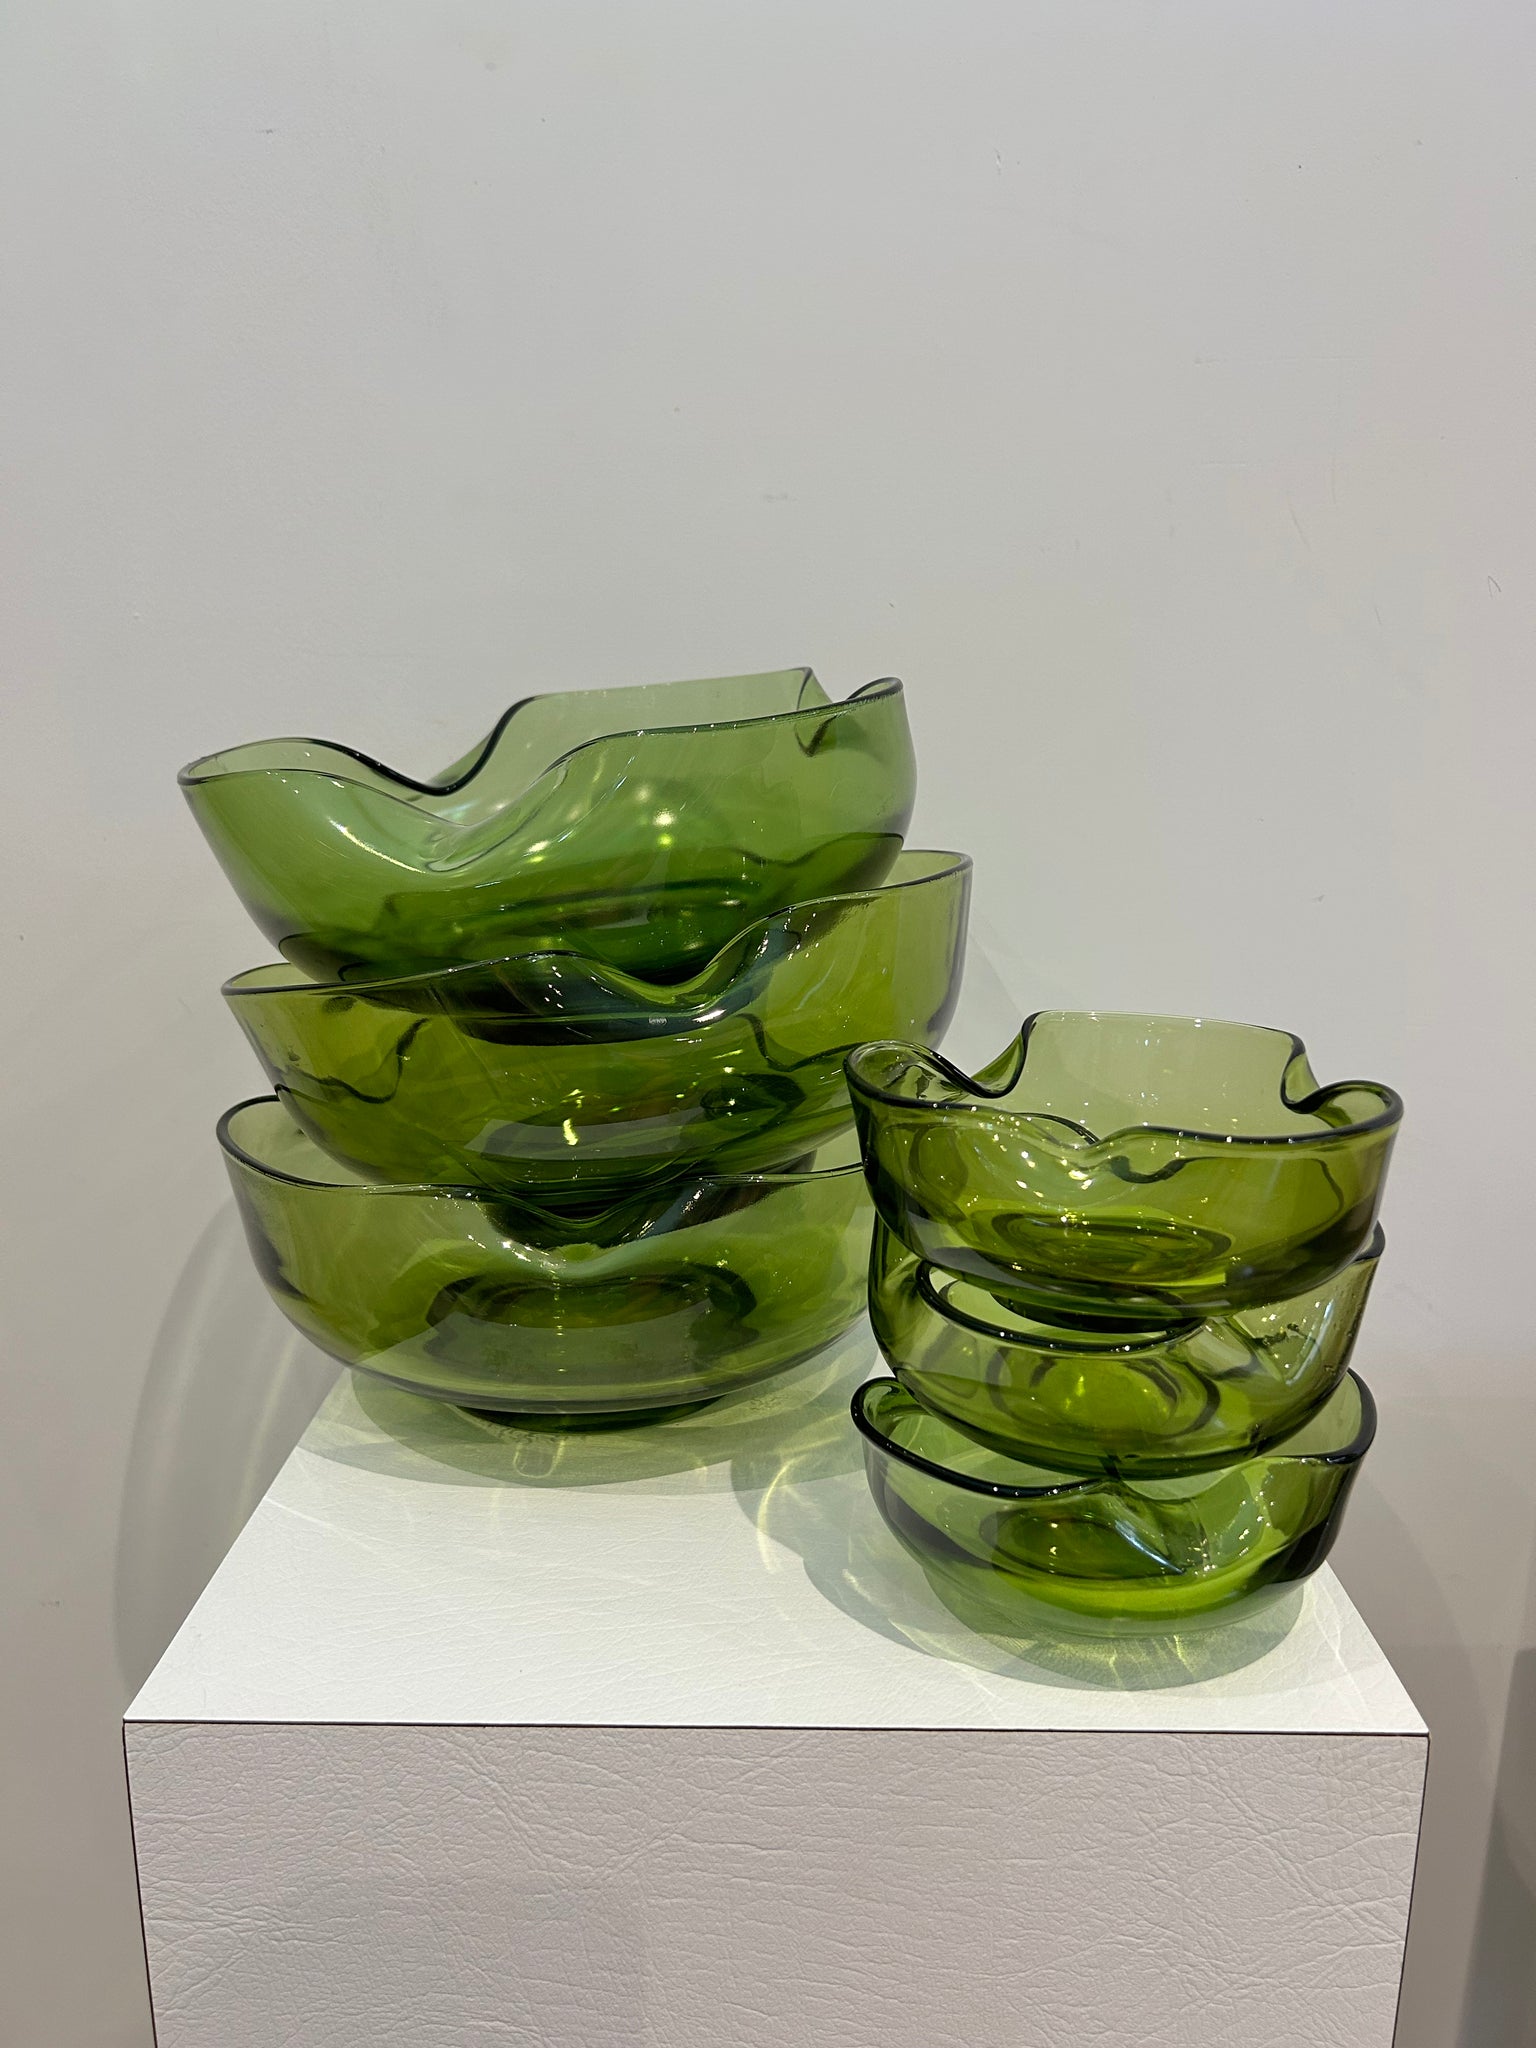 Groovy green glass bowls